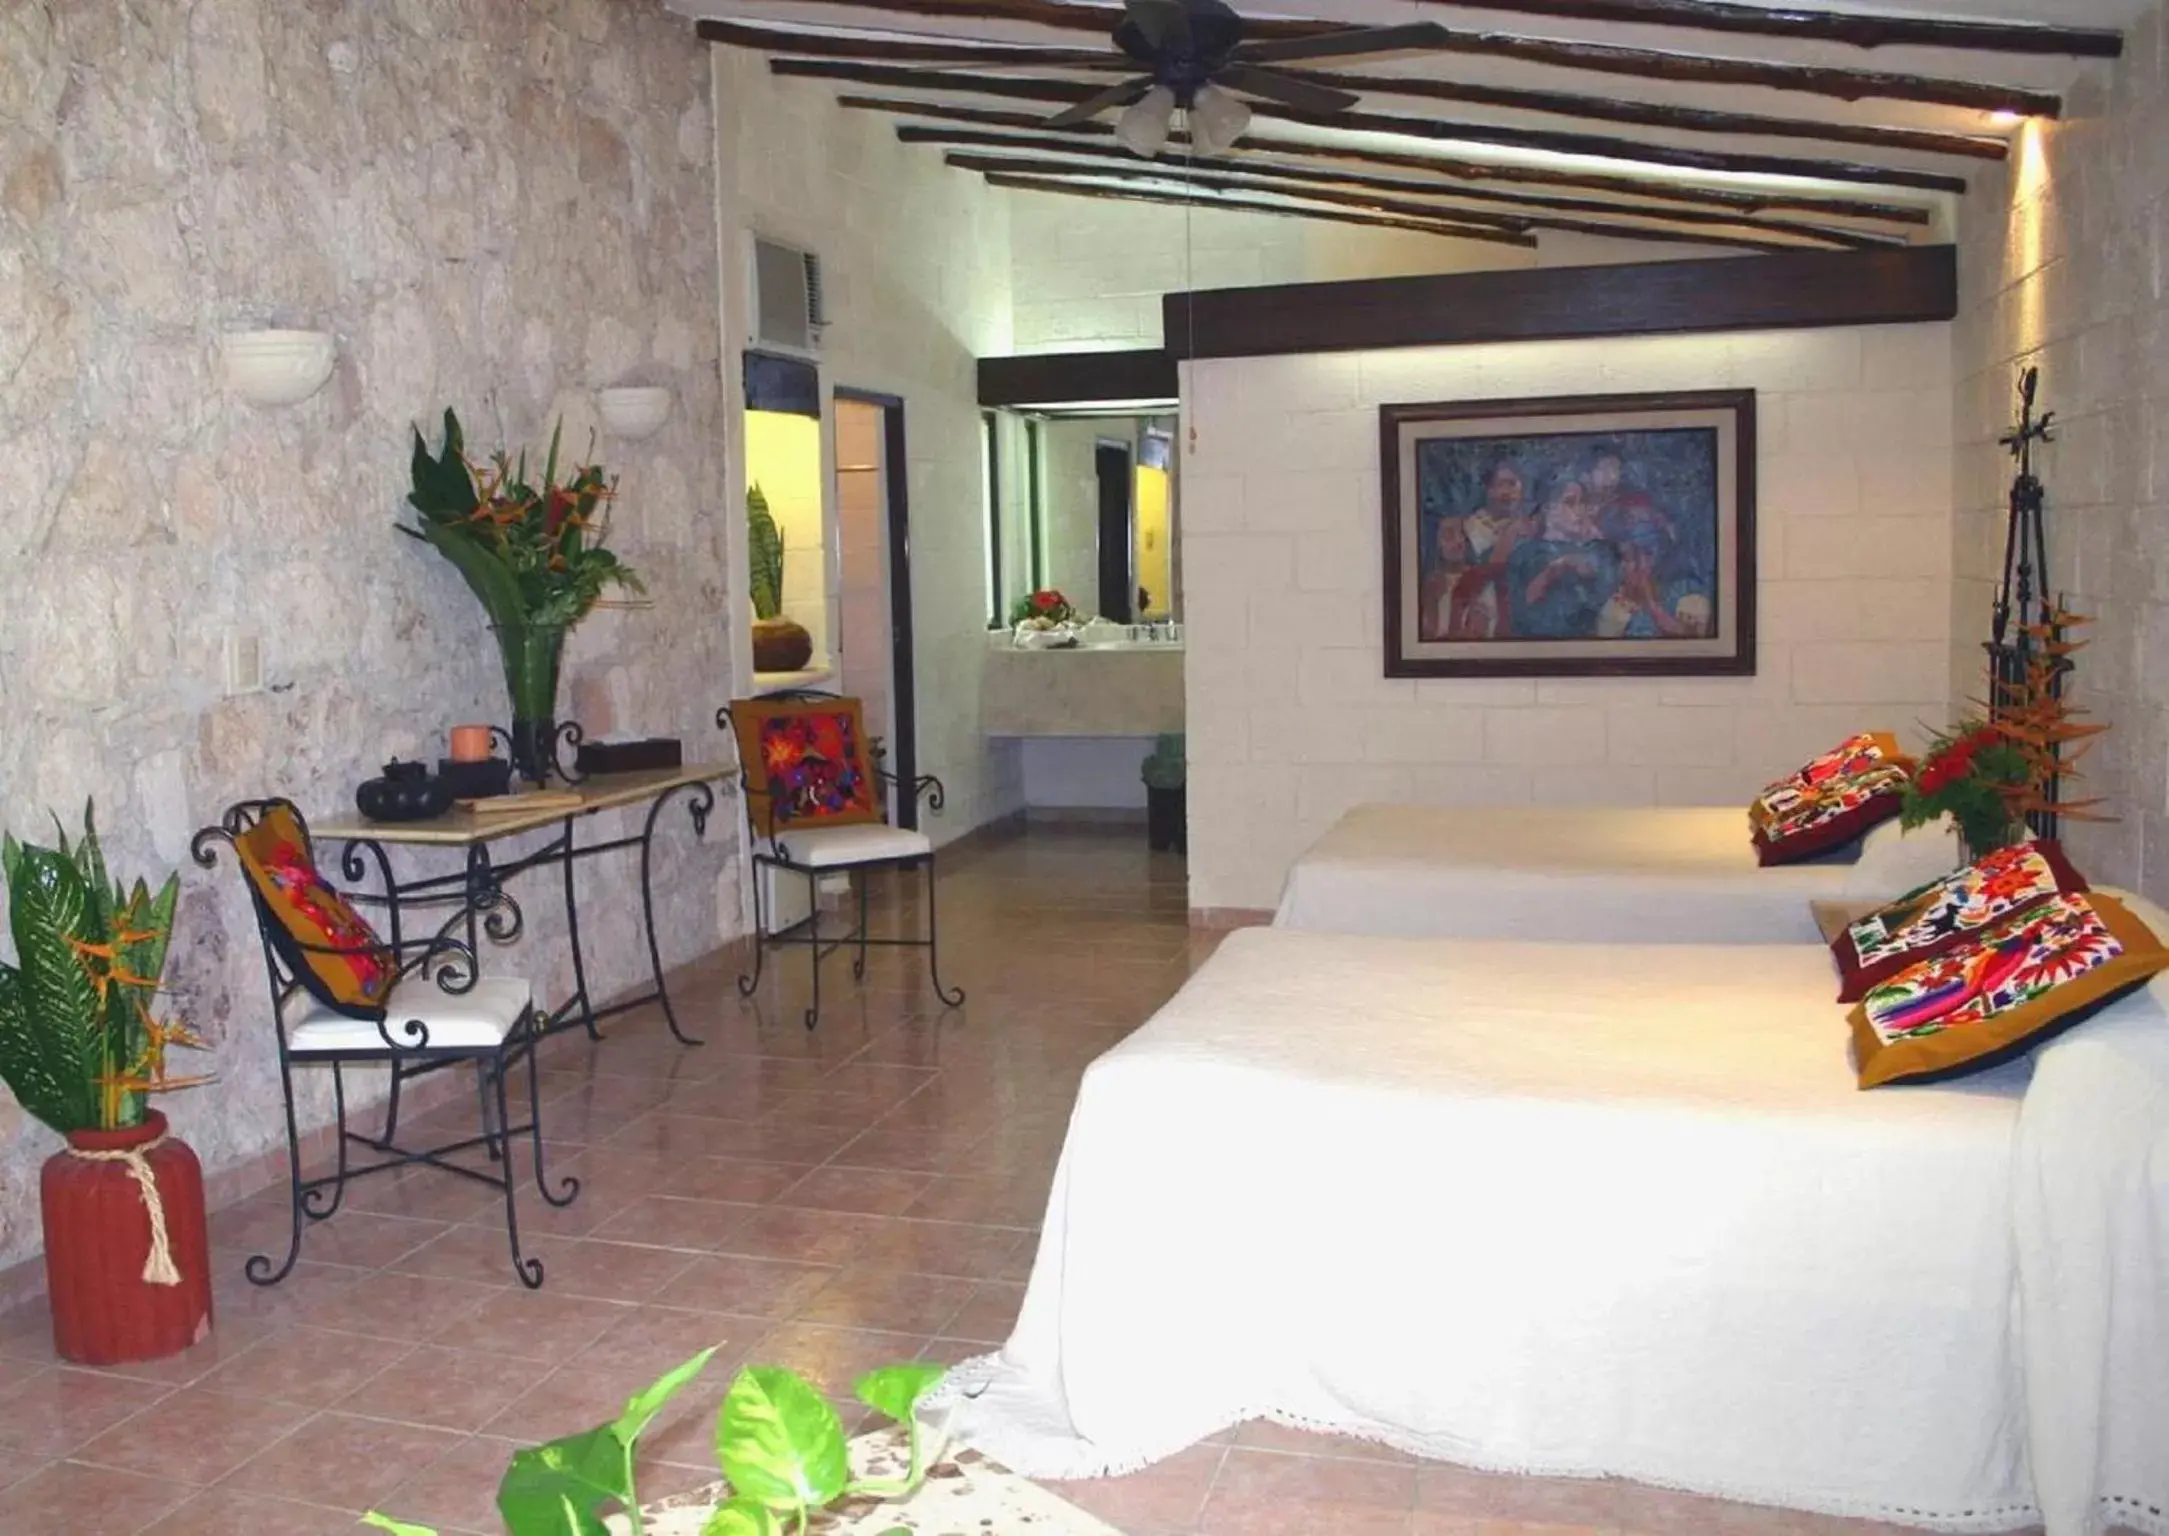 Photo of the whole room in Hacienda Chichen Resort and Yaxkin Spa